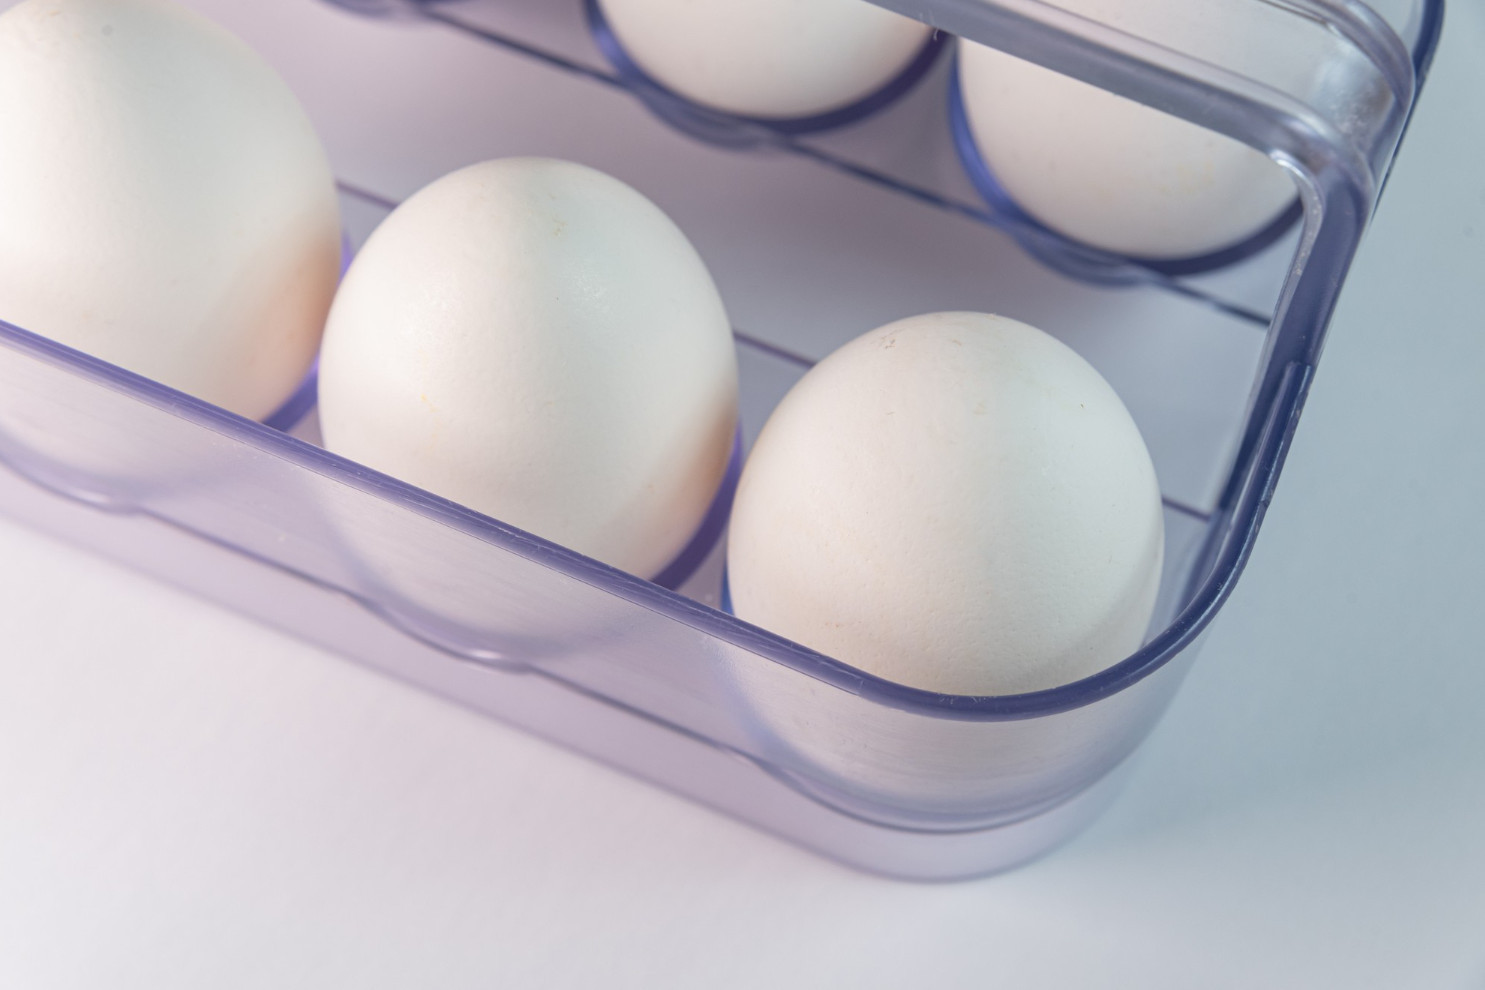 ЦБ связал рост цен на яйца со спросом со стороны фармкомпаний